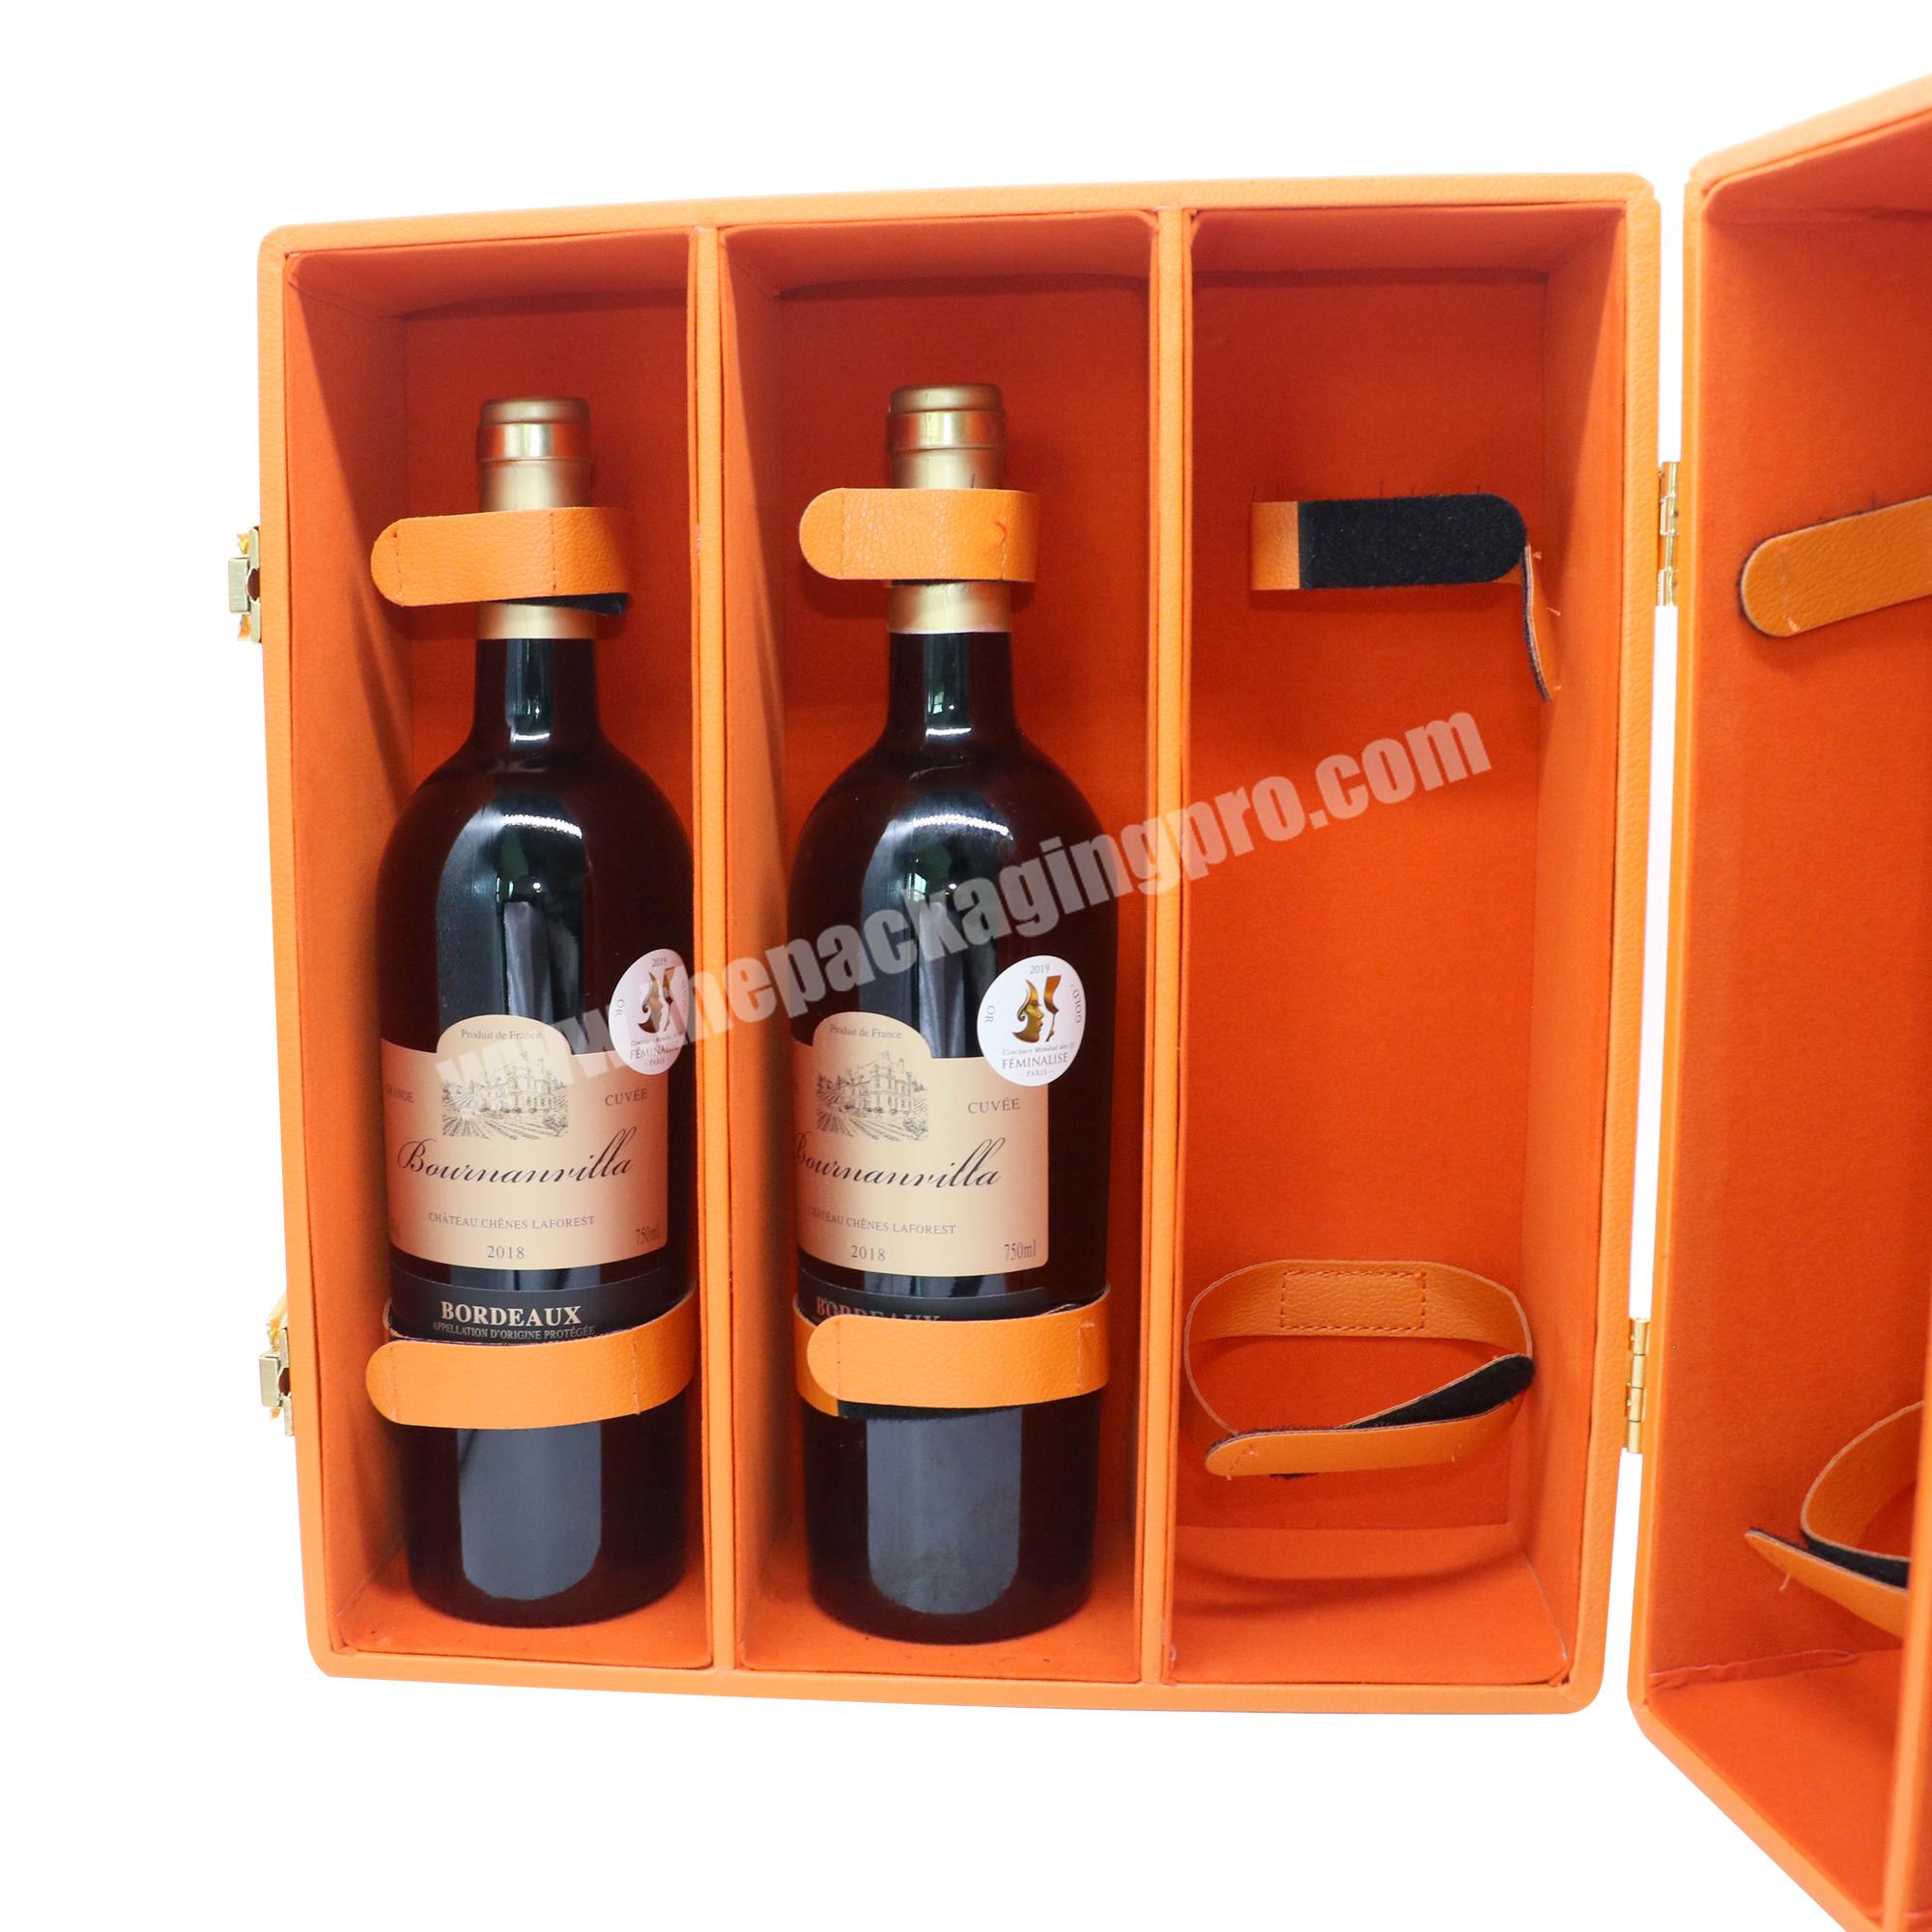 Low price 6 bottle wooden wine box wine gift set box wooden wine gift box